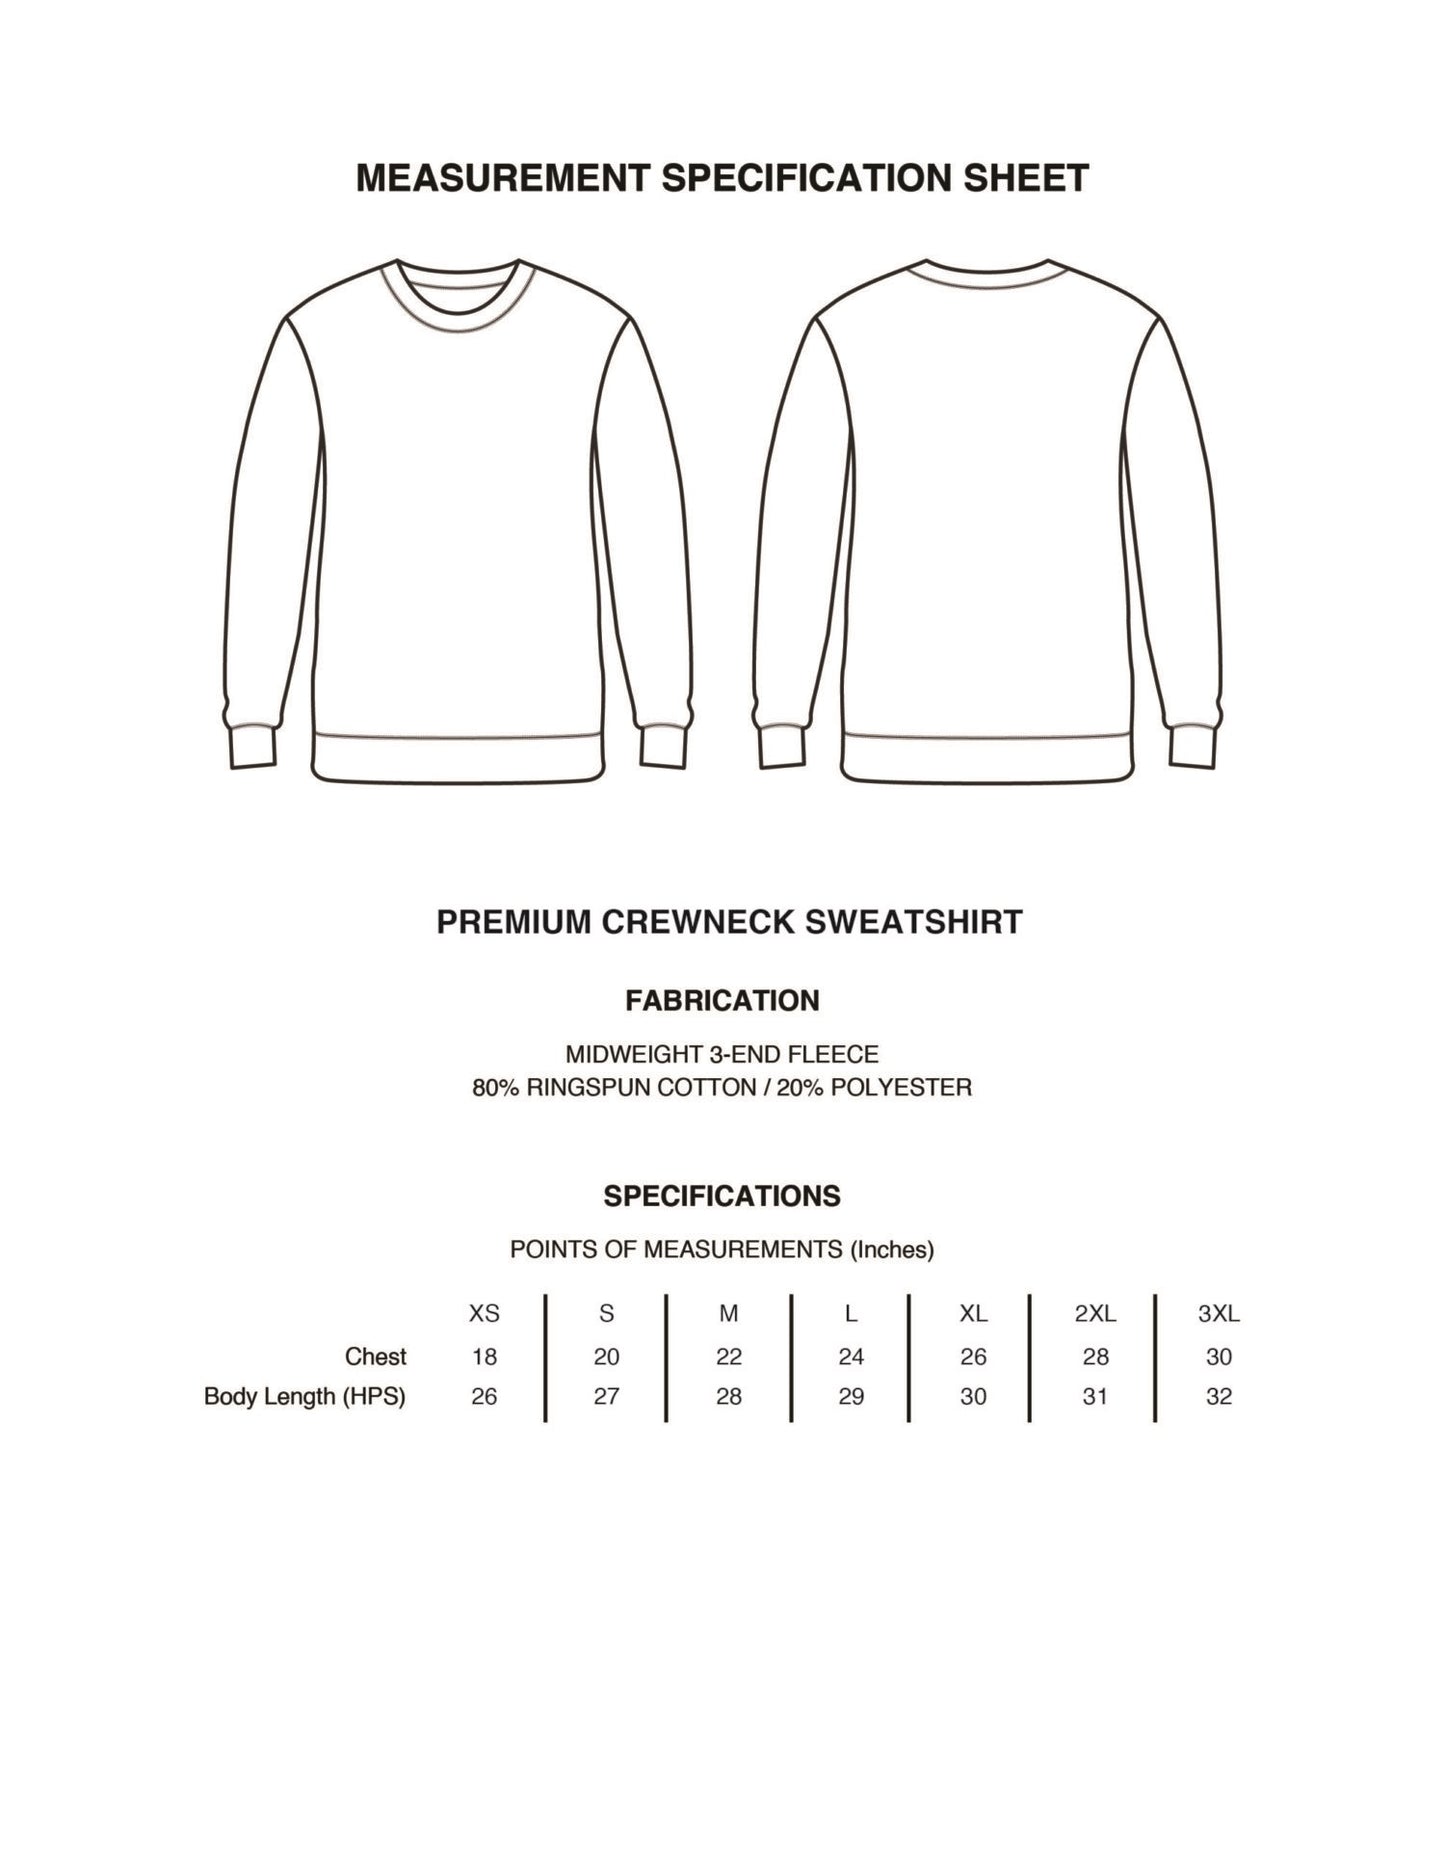 Our Motto V2 Premium Crewneck Sweater